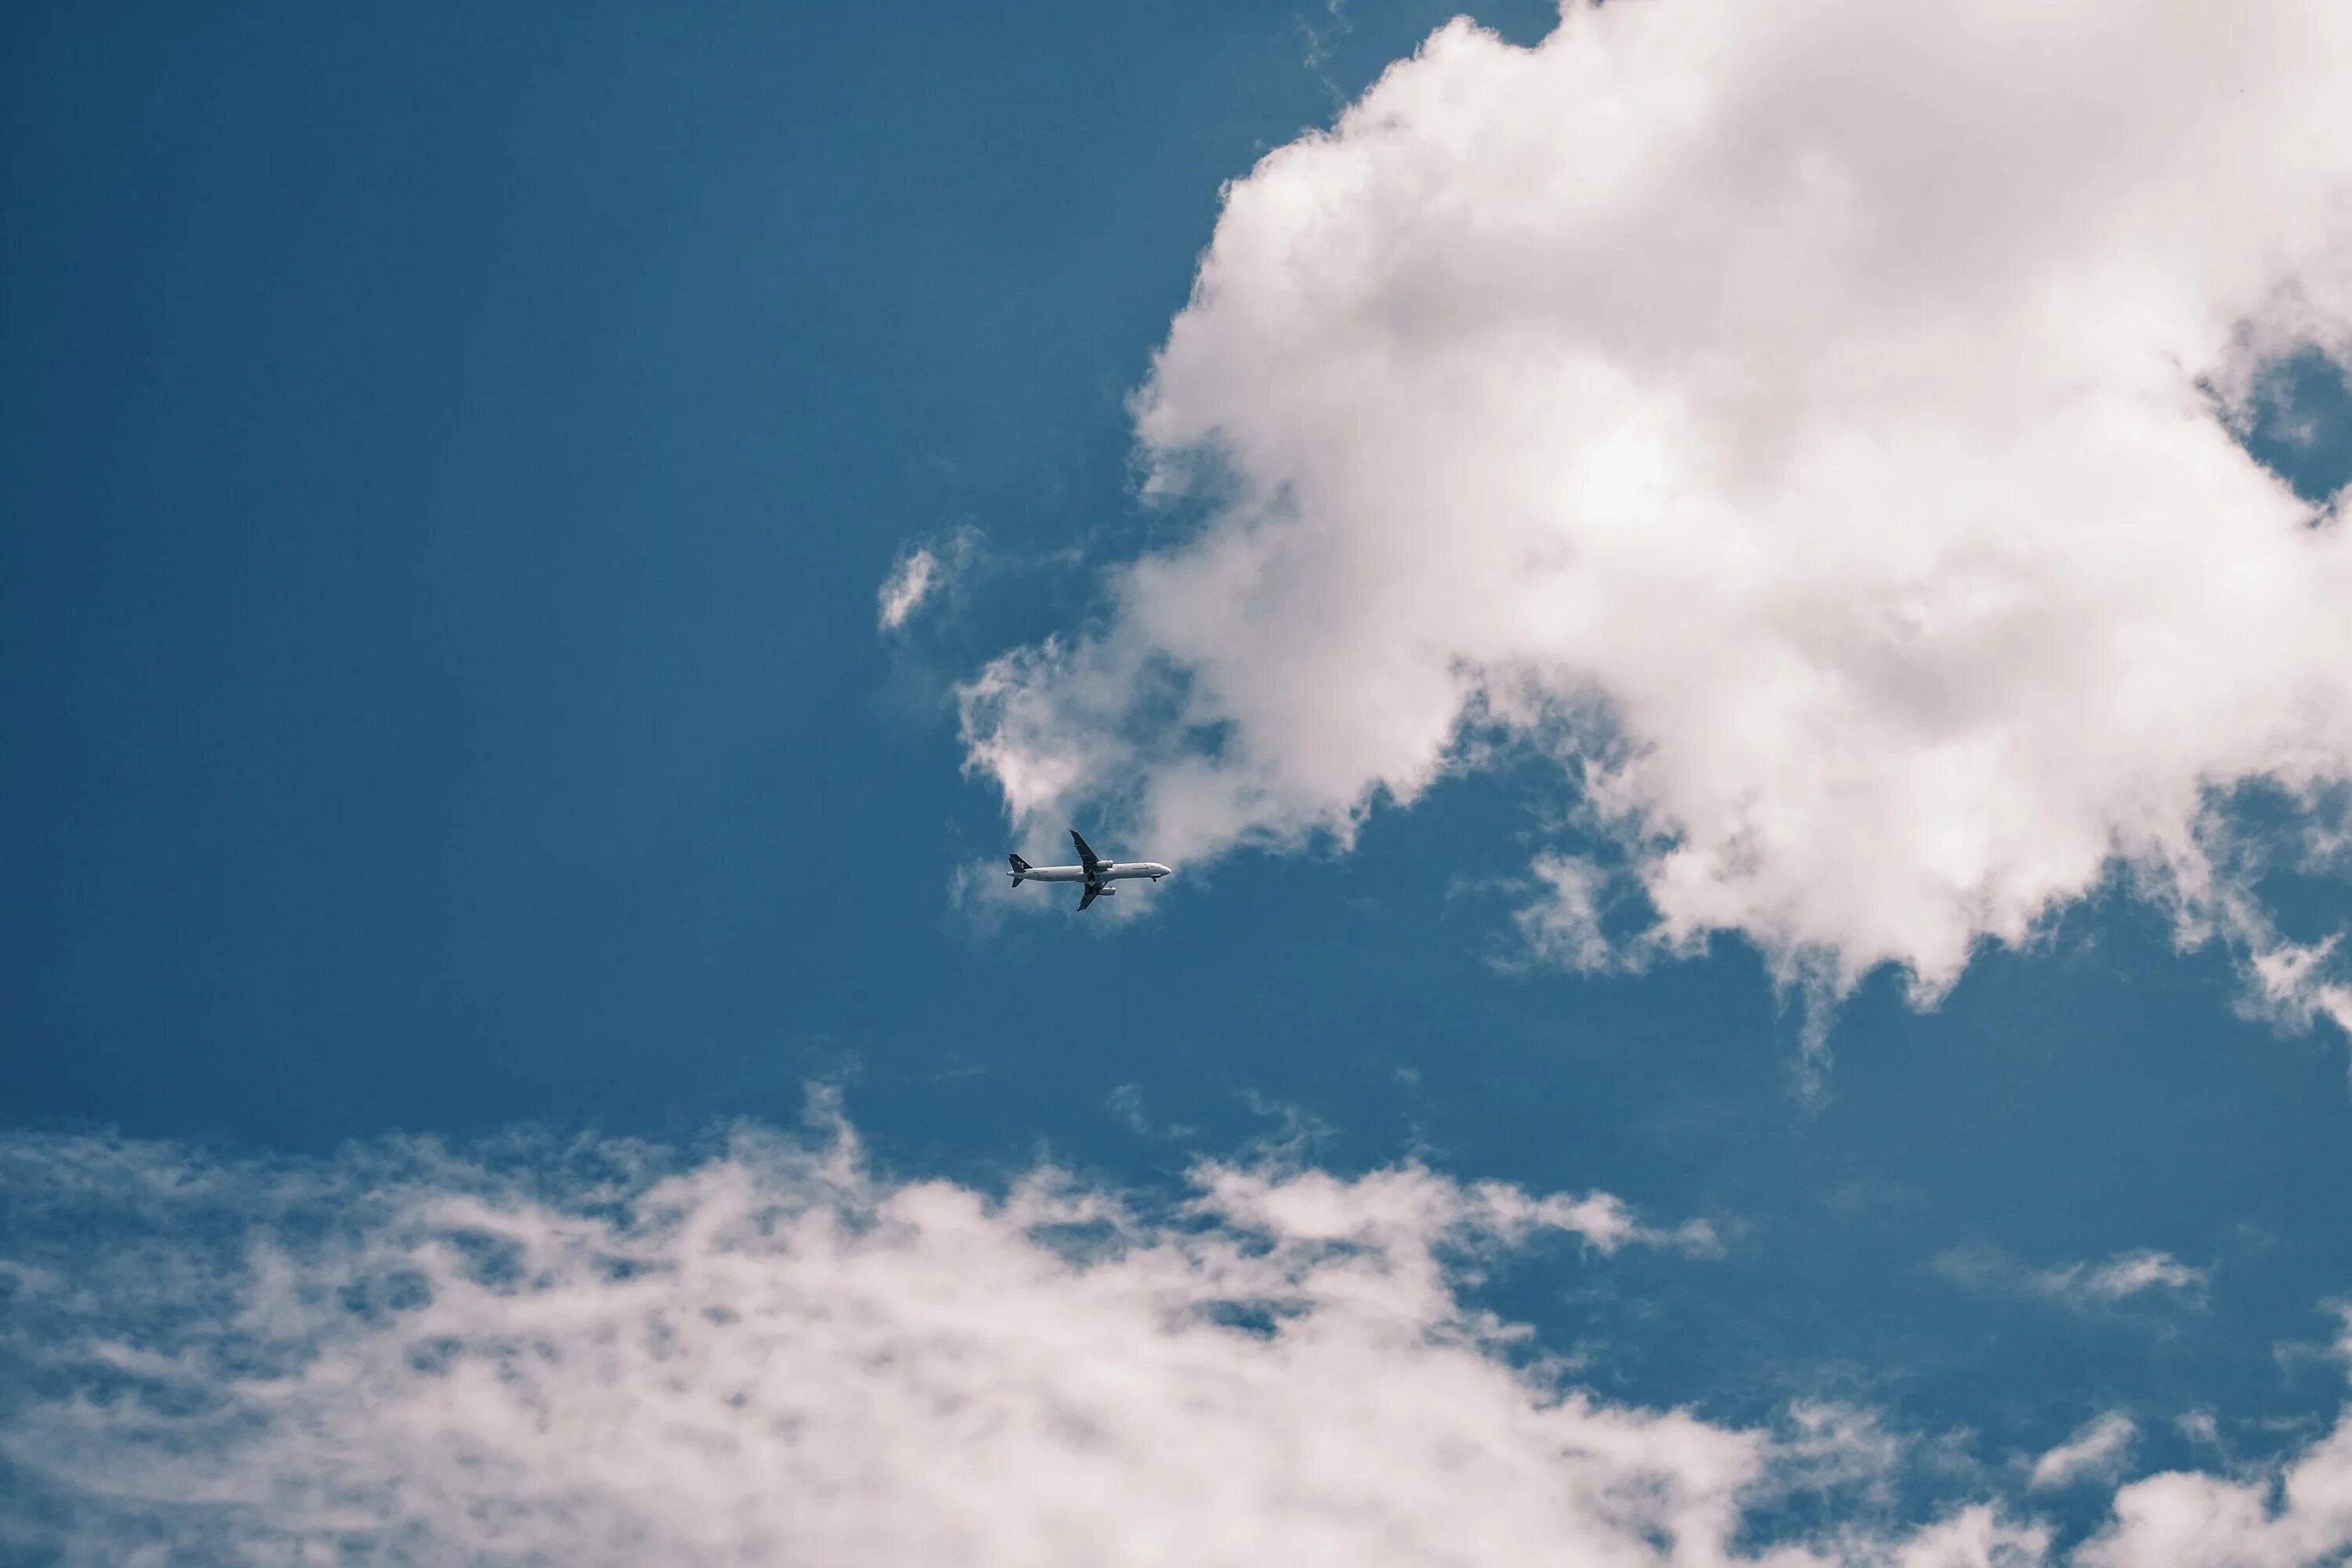 Облака надо мной летят. Самолет в небе. Самолет в облаках. Небо с самолетом вдалеке. Небо облака самолет.